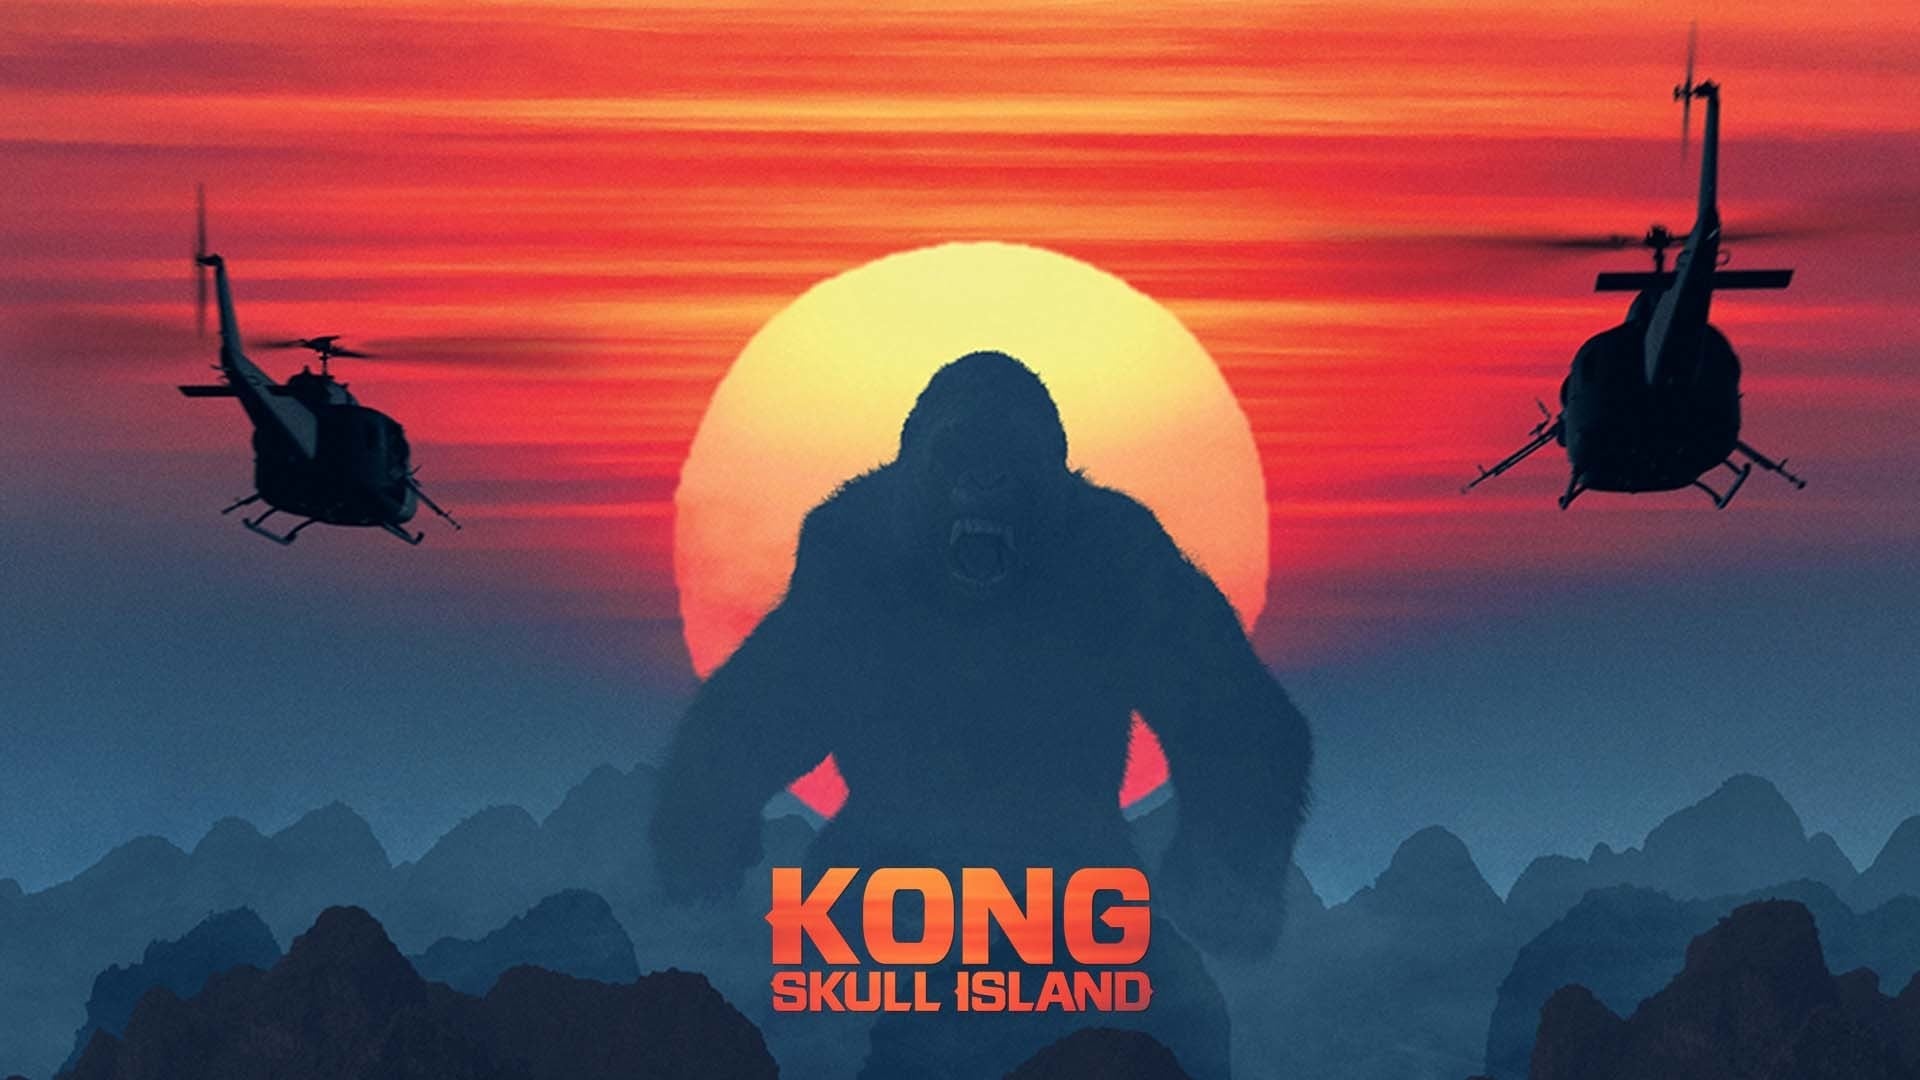 Kong: La isla calavera (2017)